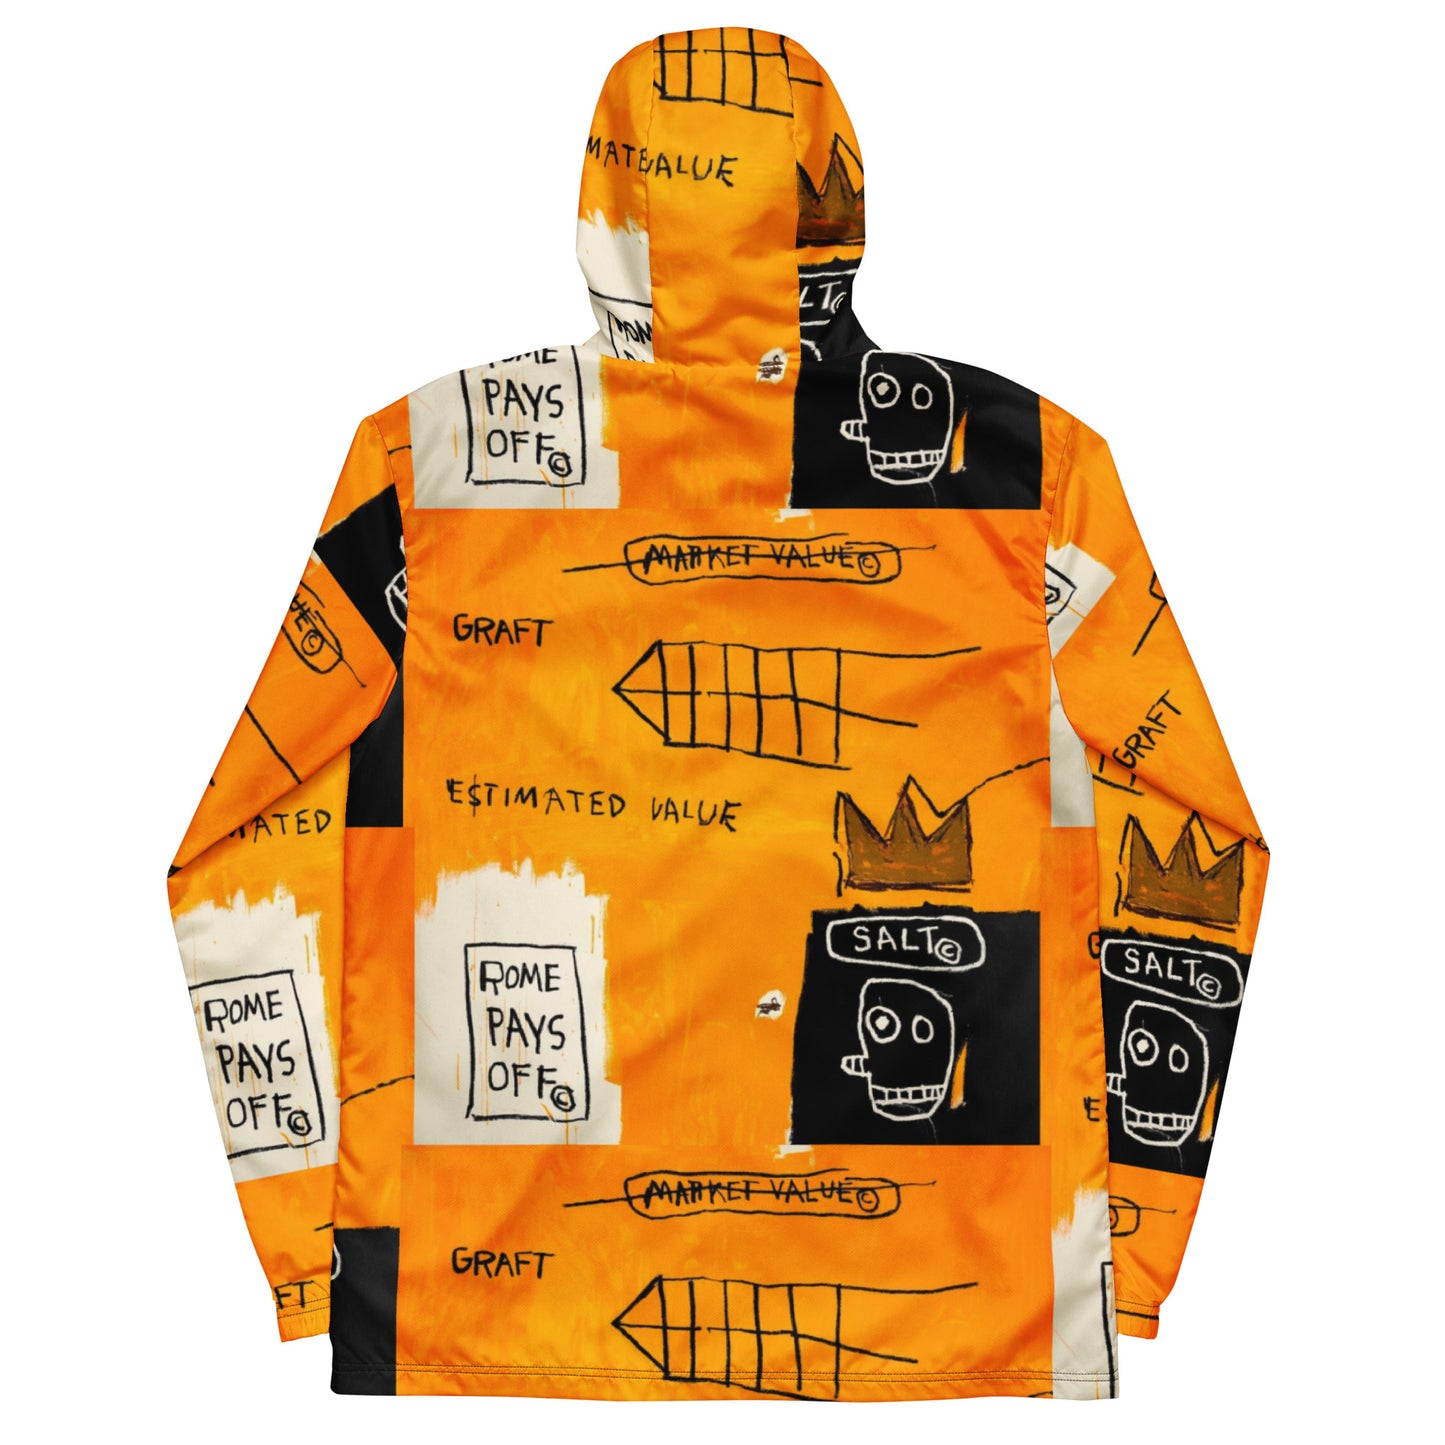 Jean-Michel Basquiat "Rome Pays Off" Artwork Printed Premium Streetwear Windbreaker Jacket